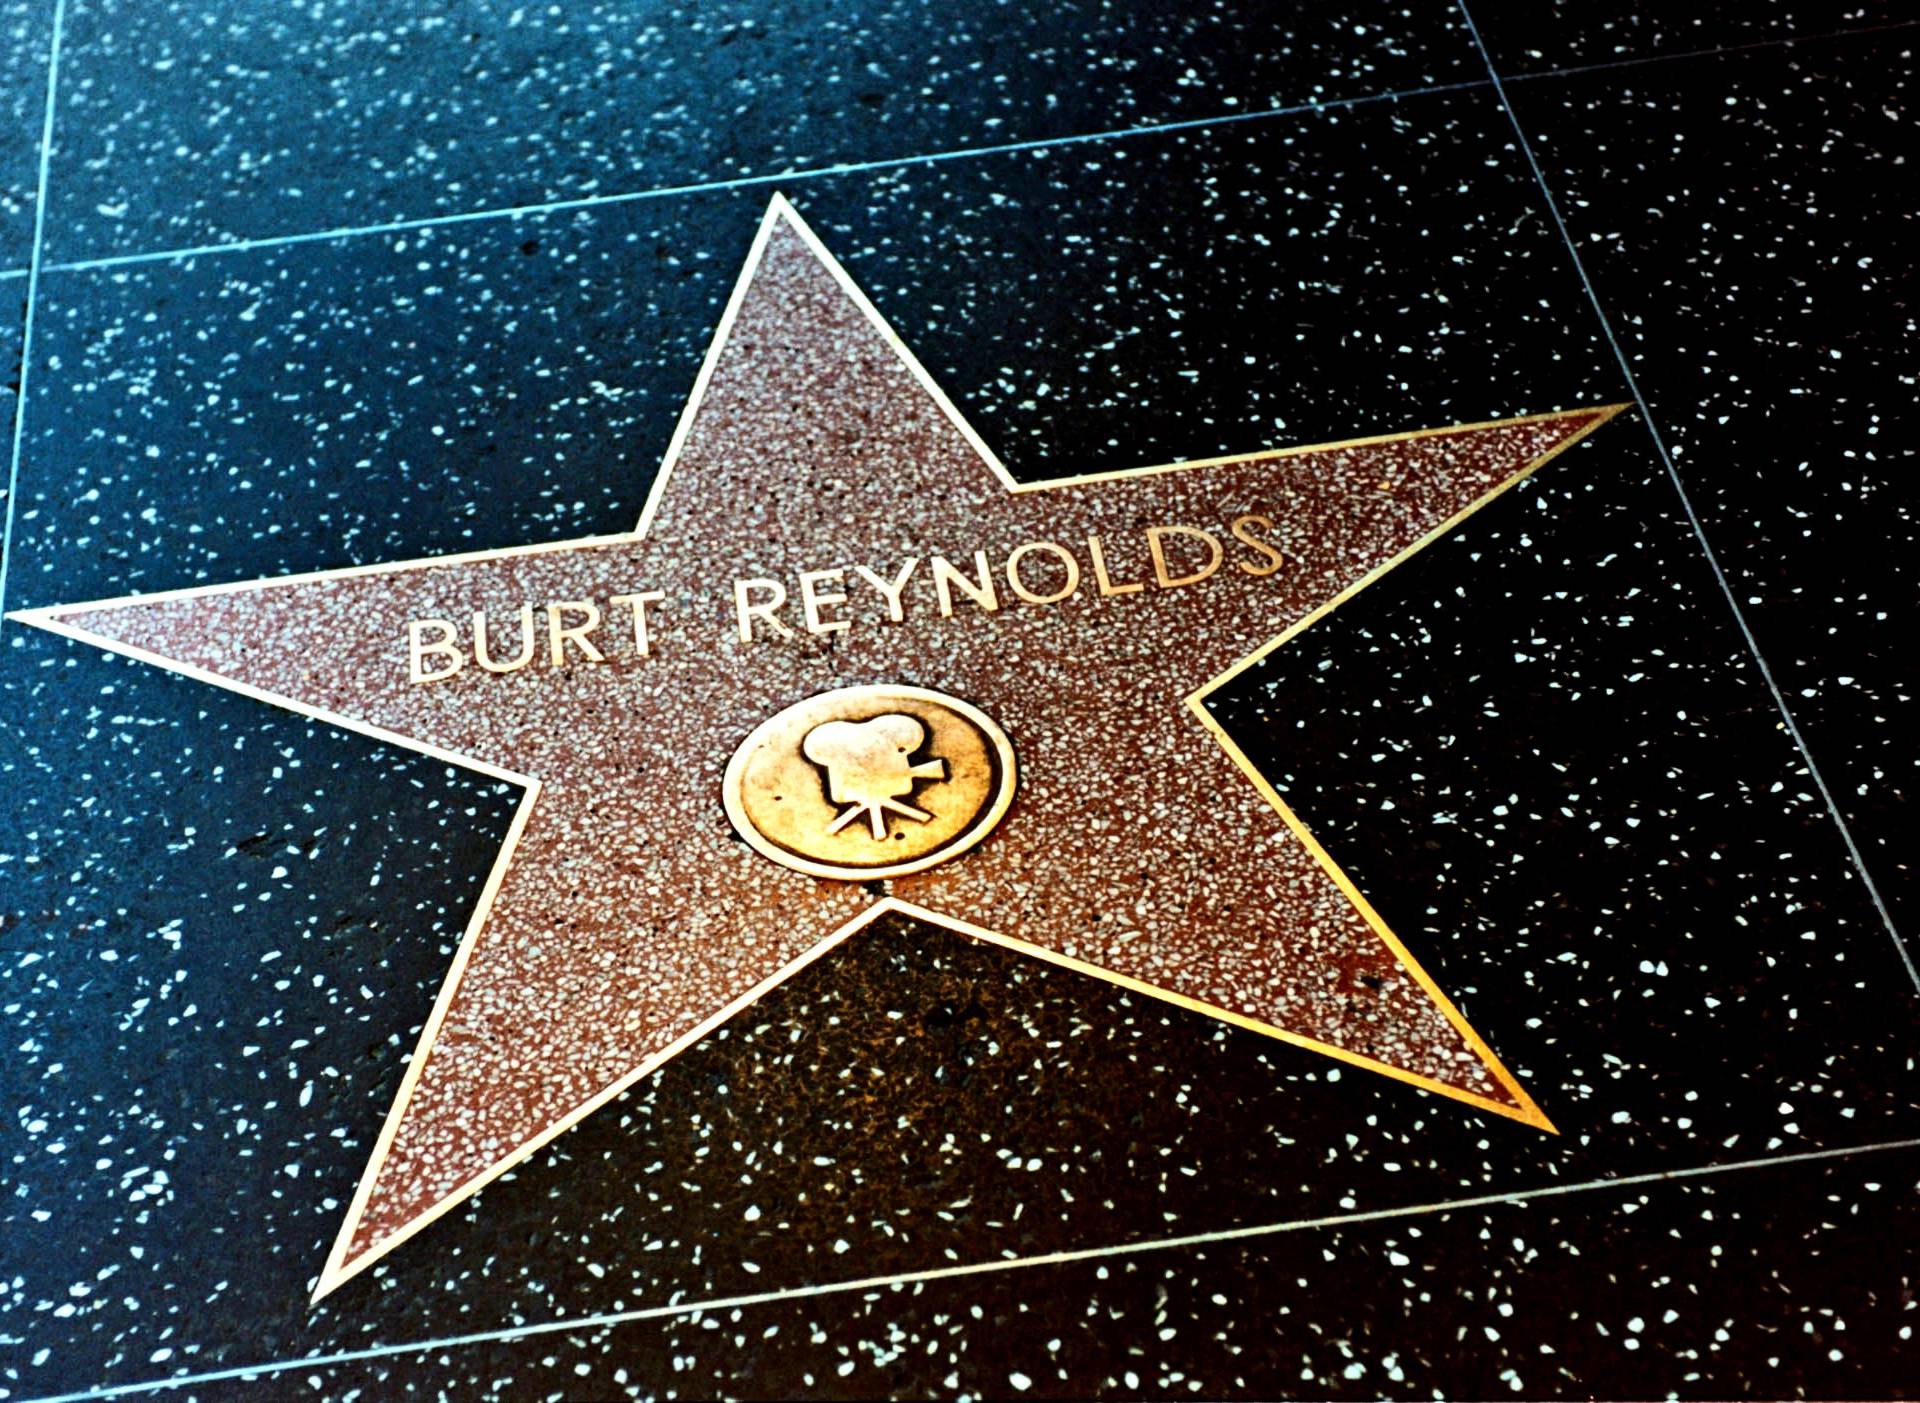 Burt Reynolds death